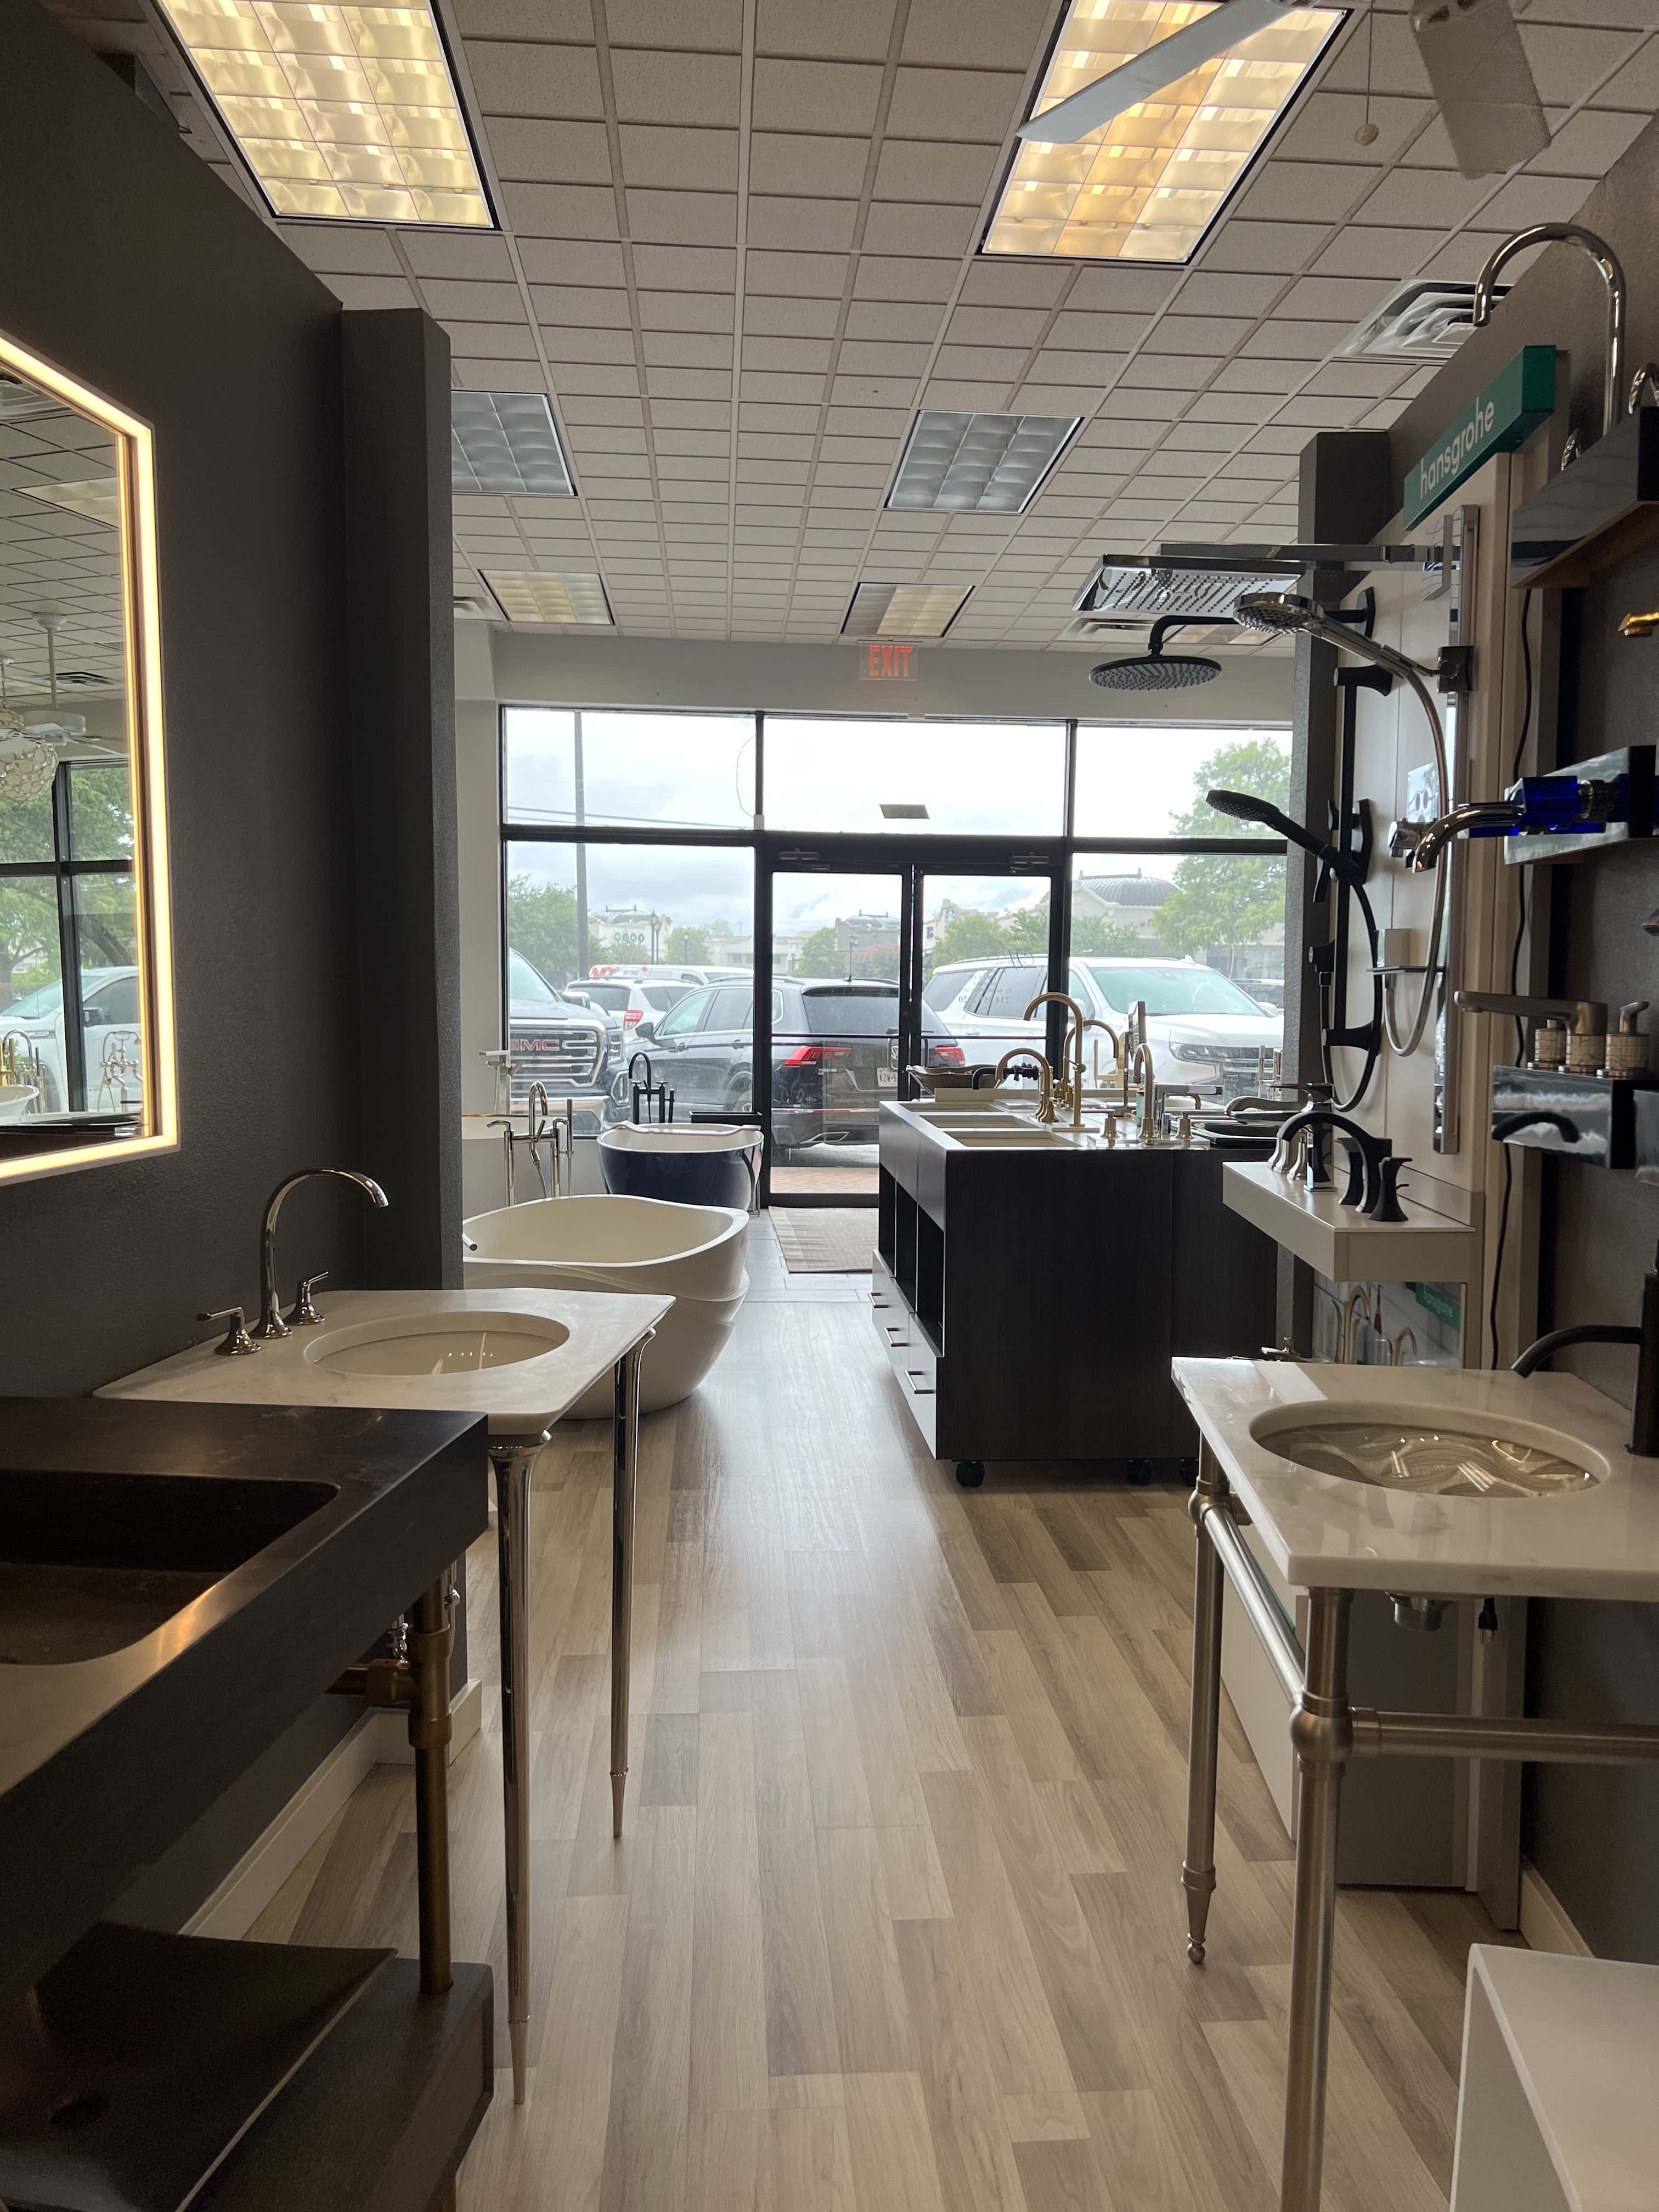 Westside Kitchen and Bath - Dallas, TX, US, kitchen remodel cost estimator